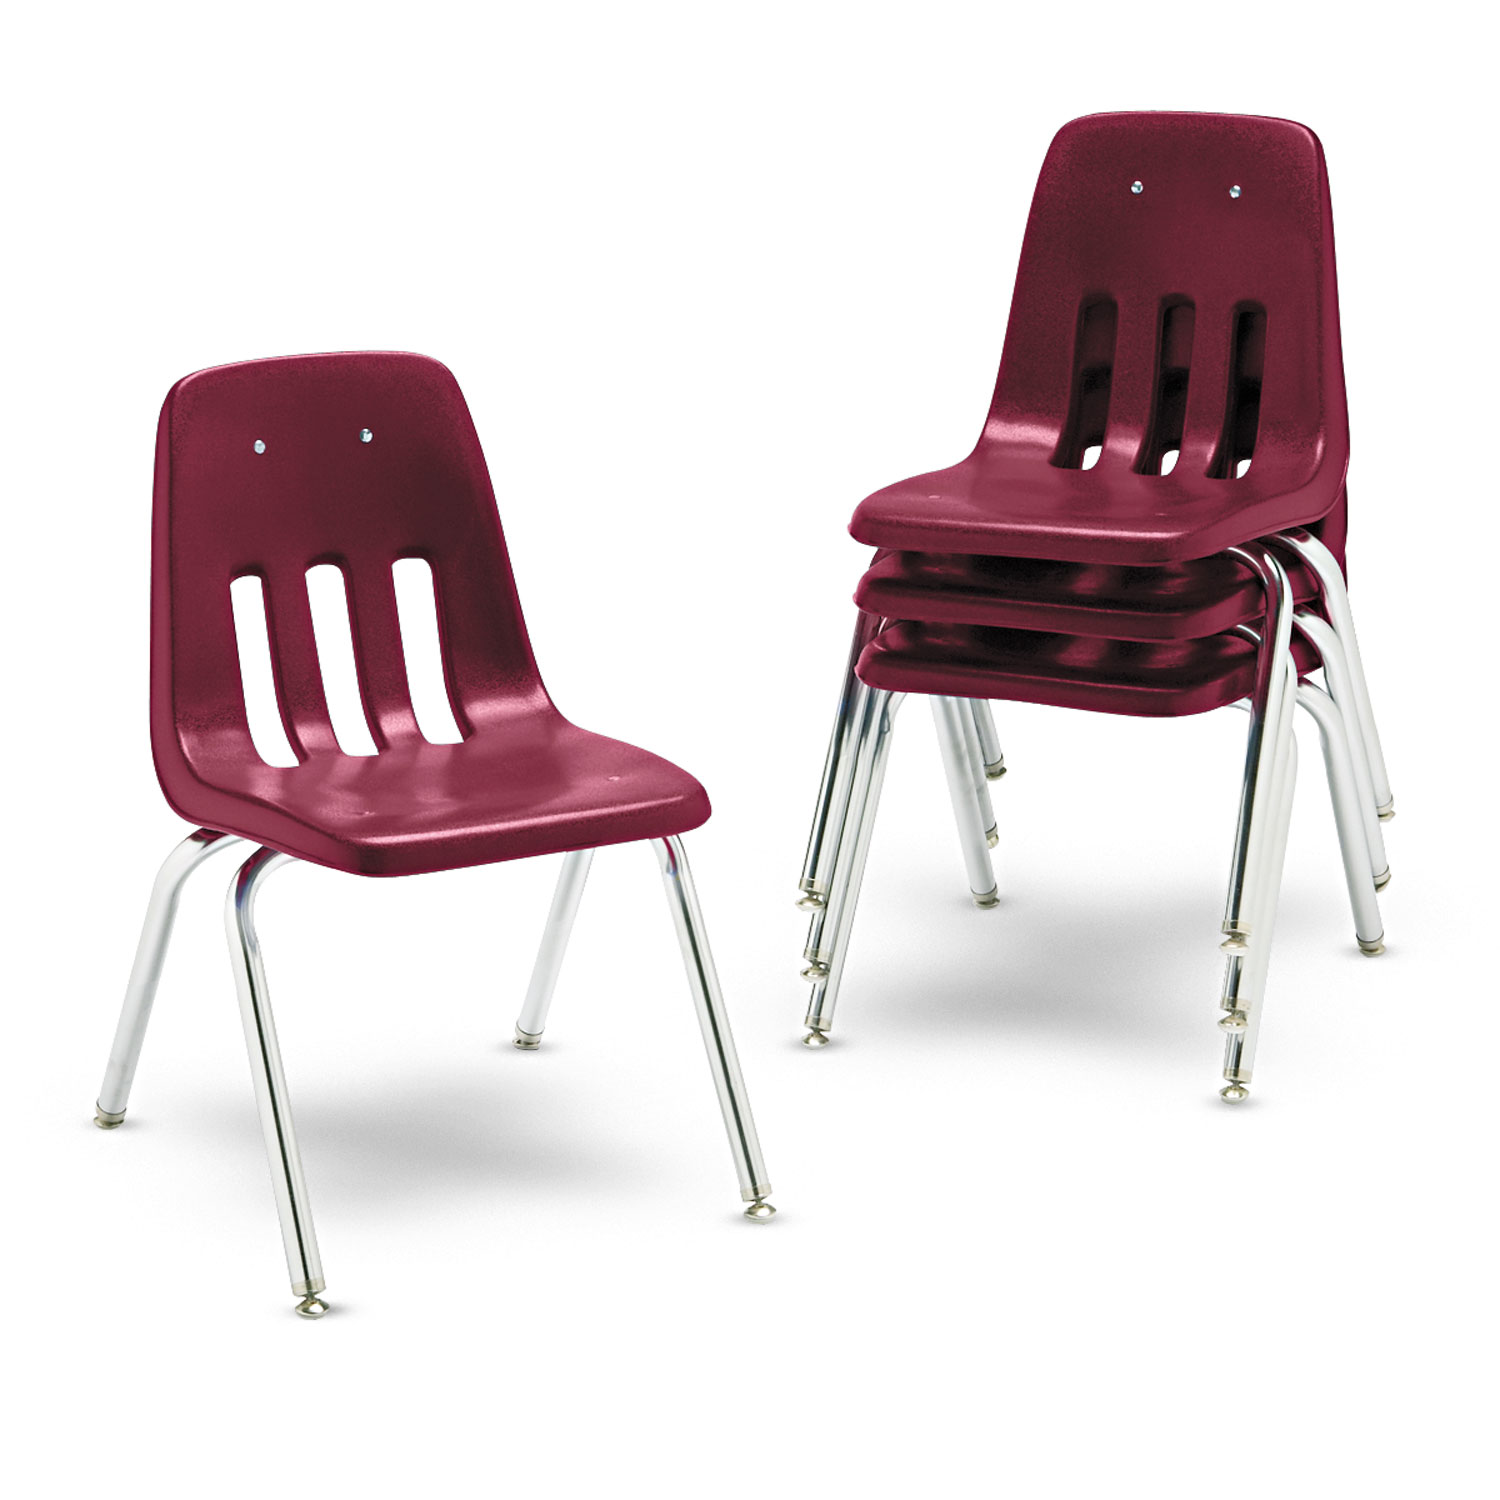 9000 Series Classroom Chairs, 16 Seat Height, Wine/Chrome, 4/Carton